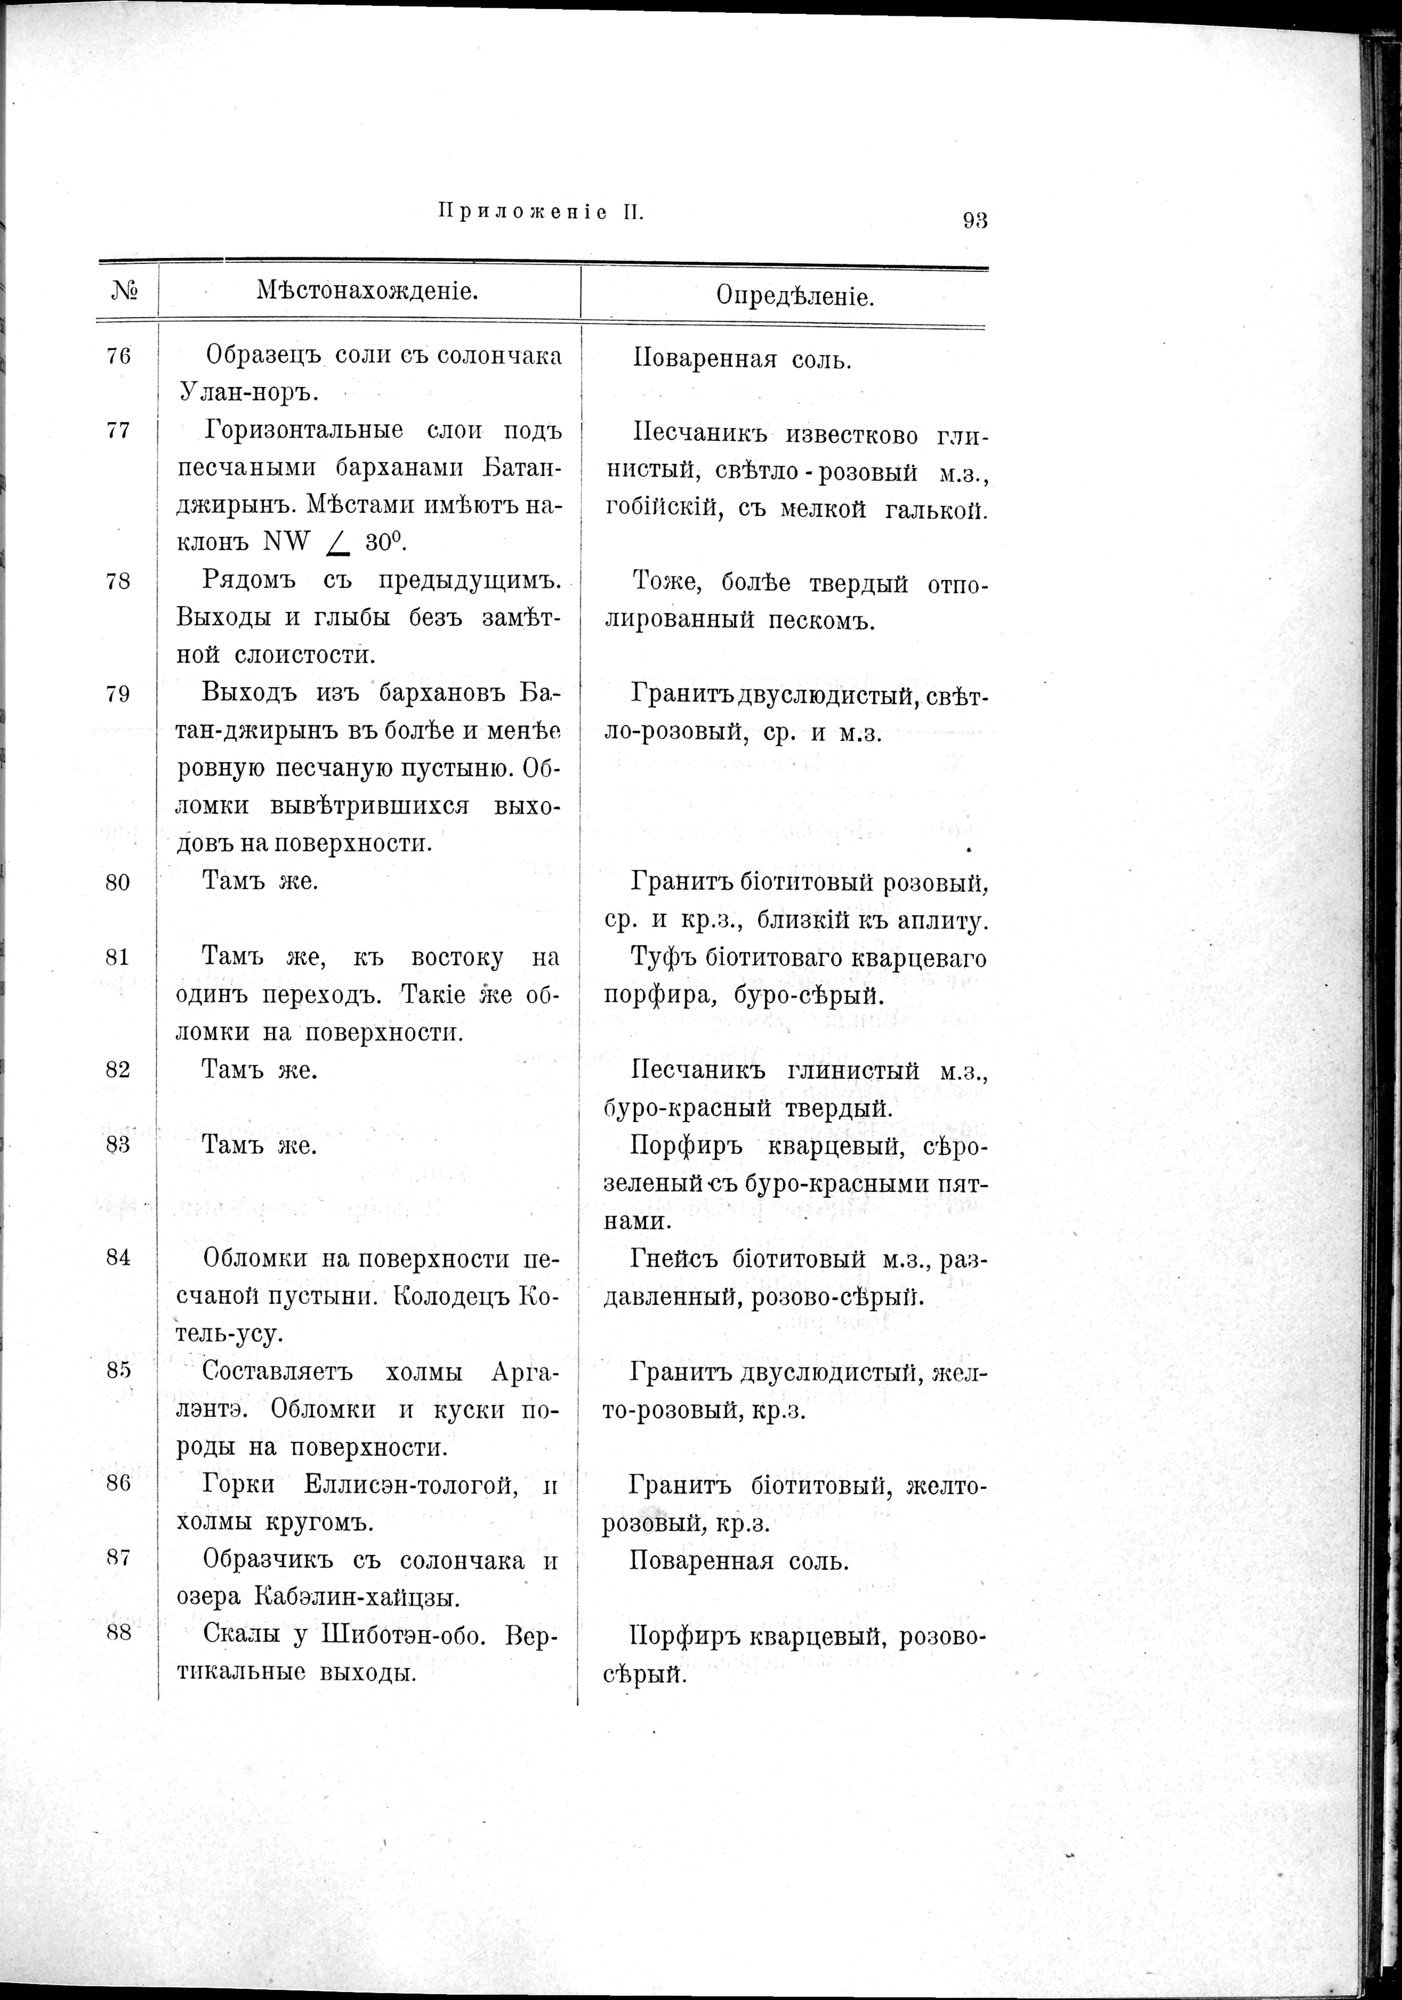 Mongoliia i Kam : vol.3 / Page 123 (Grayscale High Resolution Image)